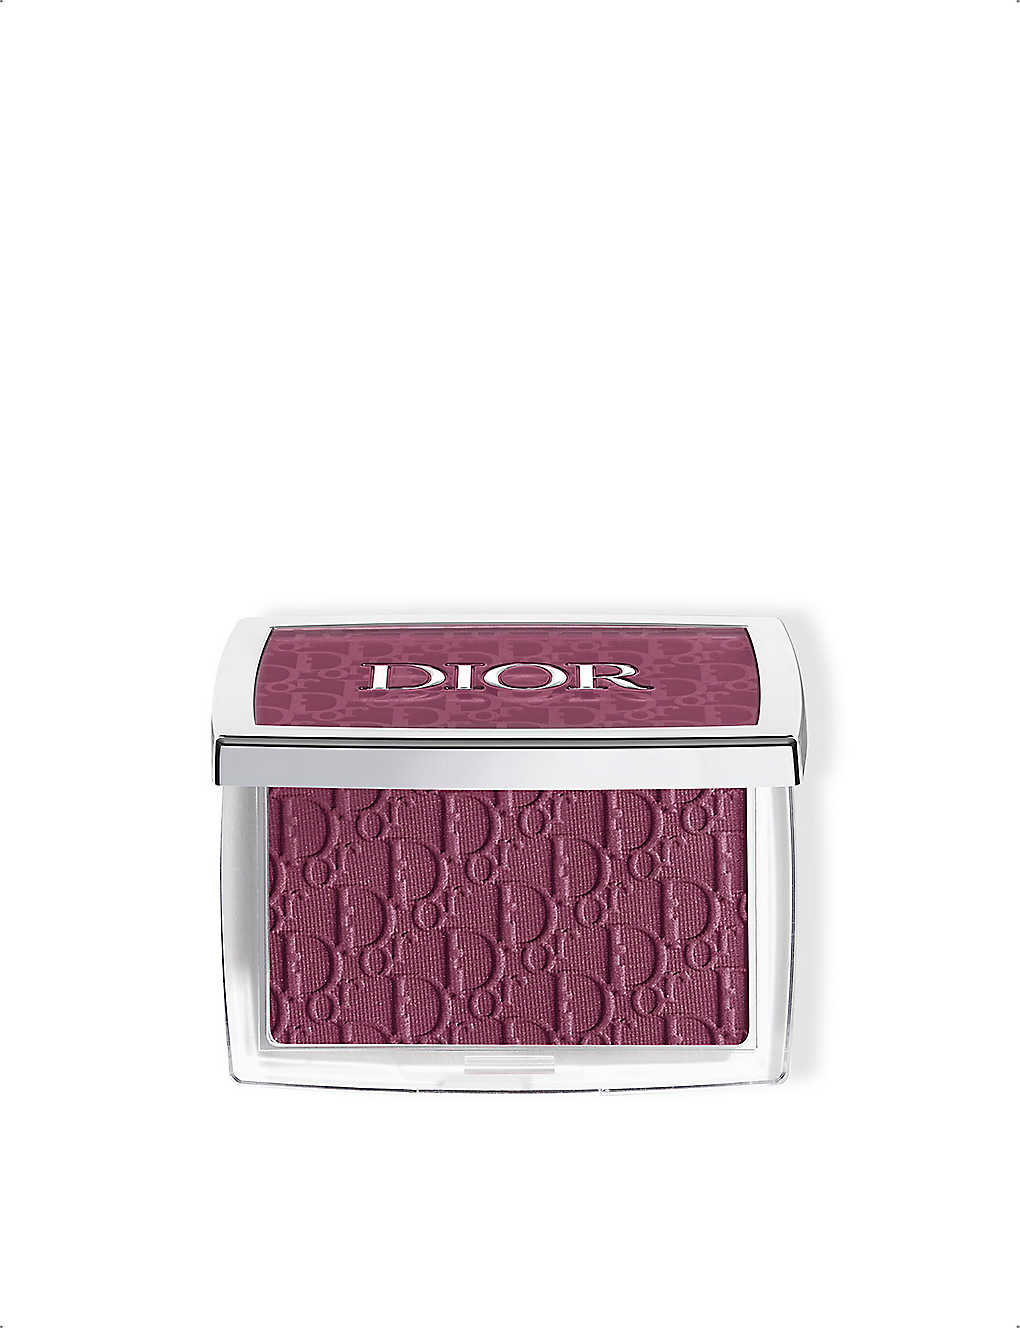 Dior 006 Berry Rosy Glow Blush 4.6g